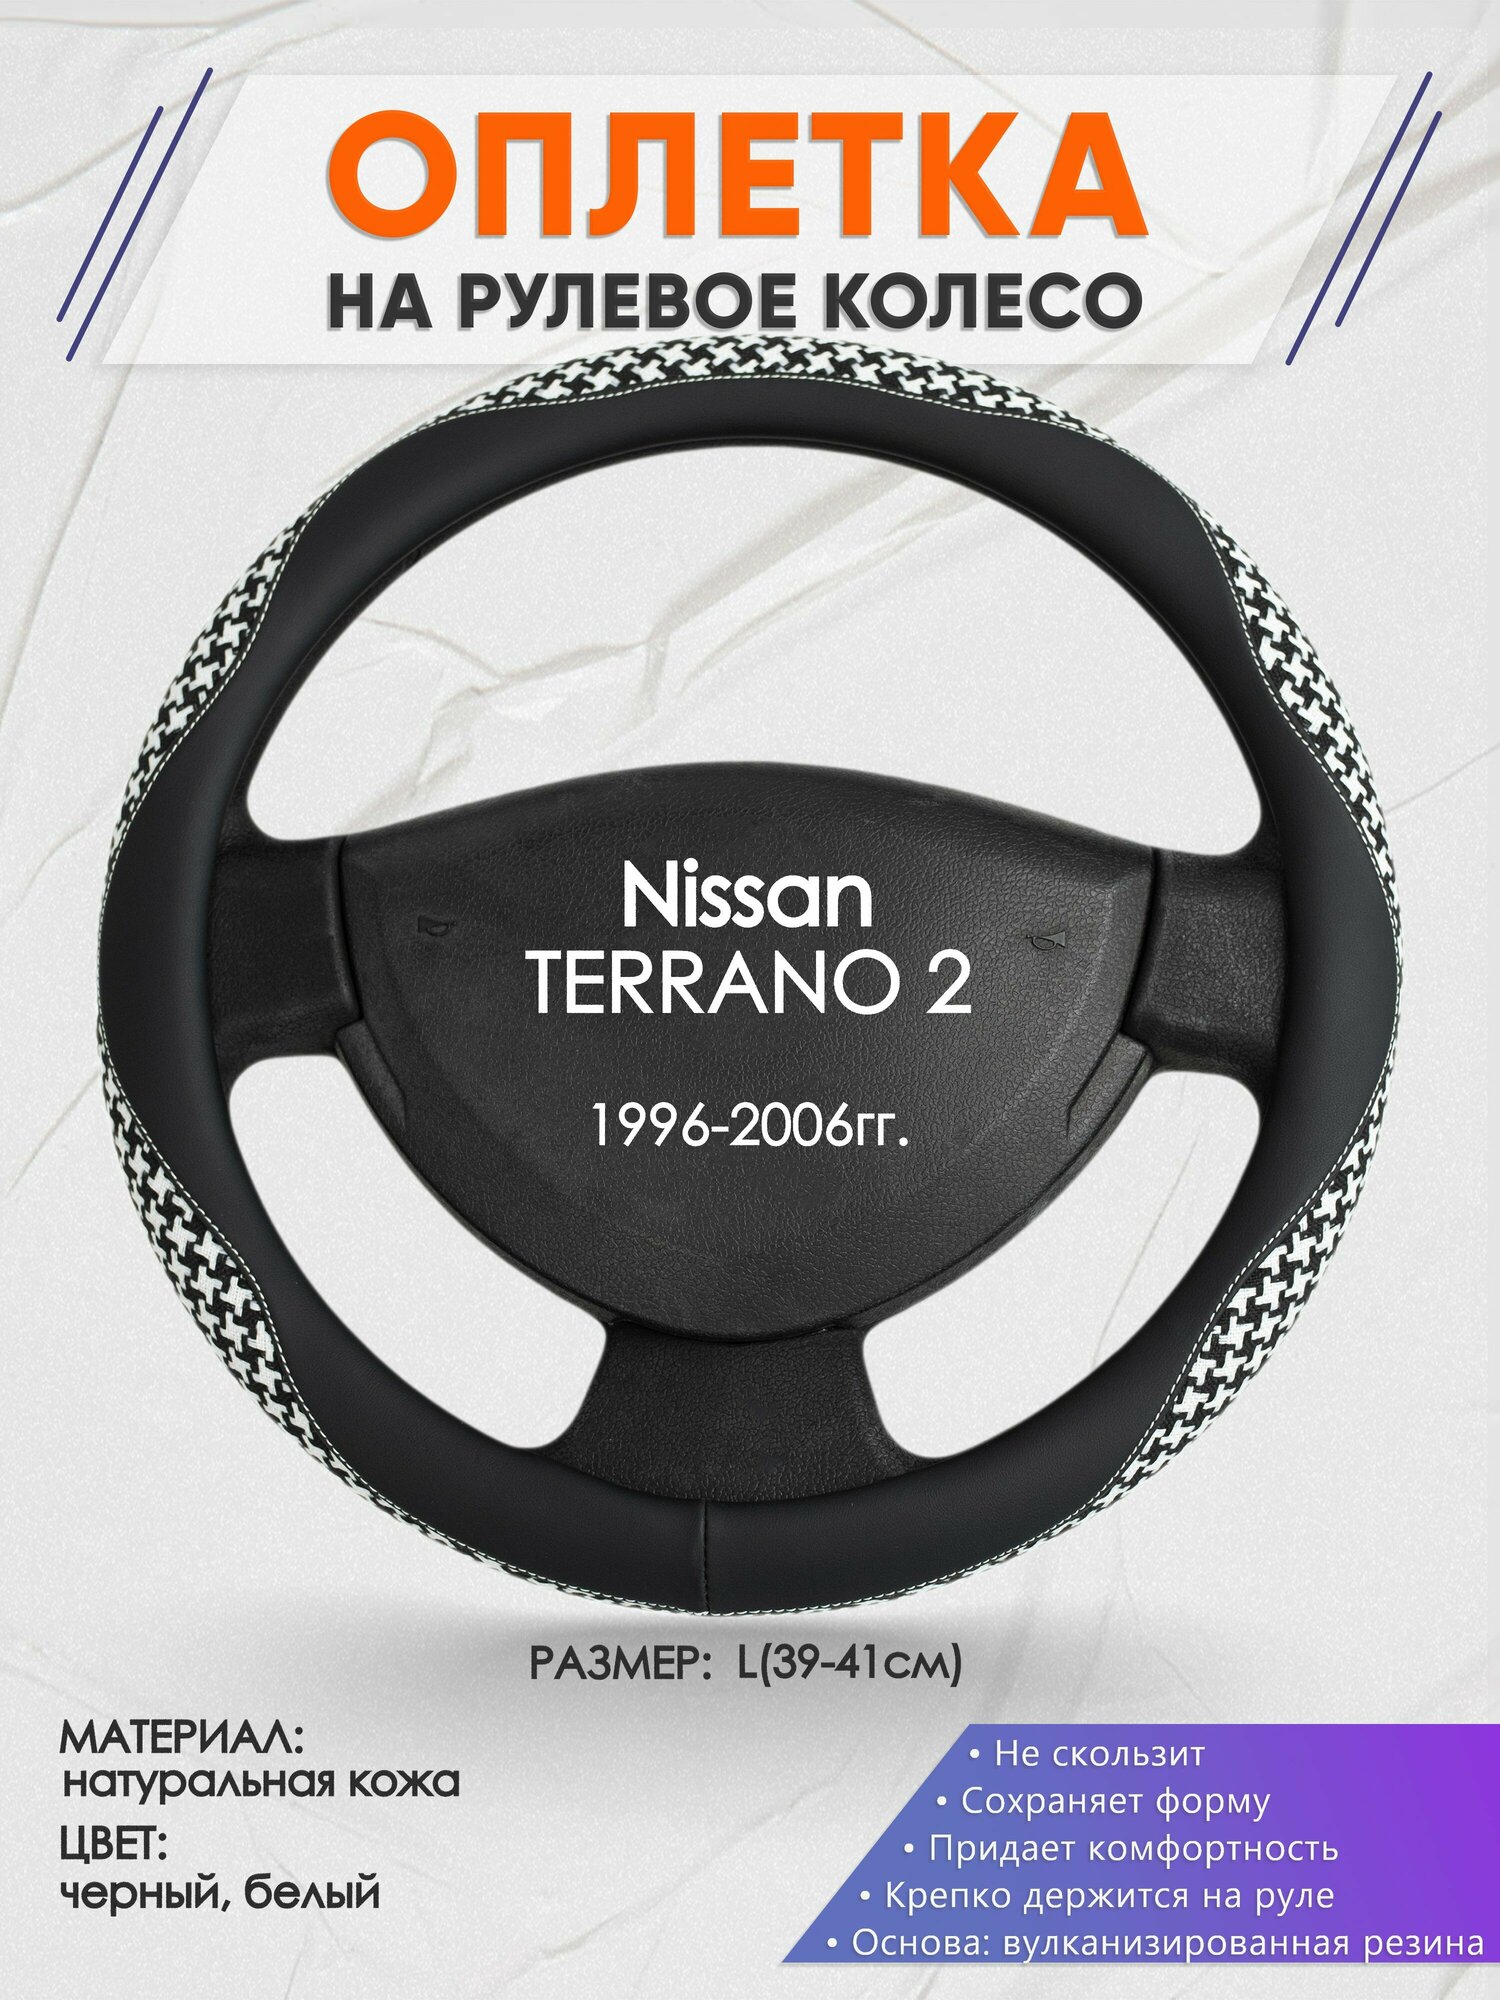 Оплетка на руль для Nissan TERRANO 2(Ниссан Террано 2) 1996-2006, L(39-41см), Натуральная кожа 21